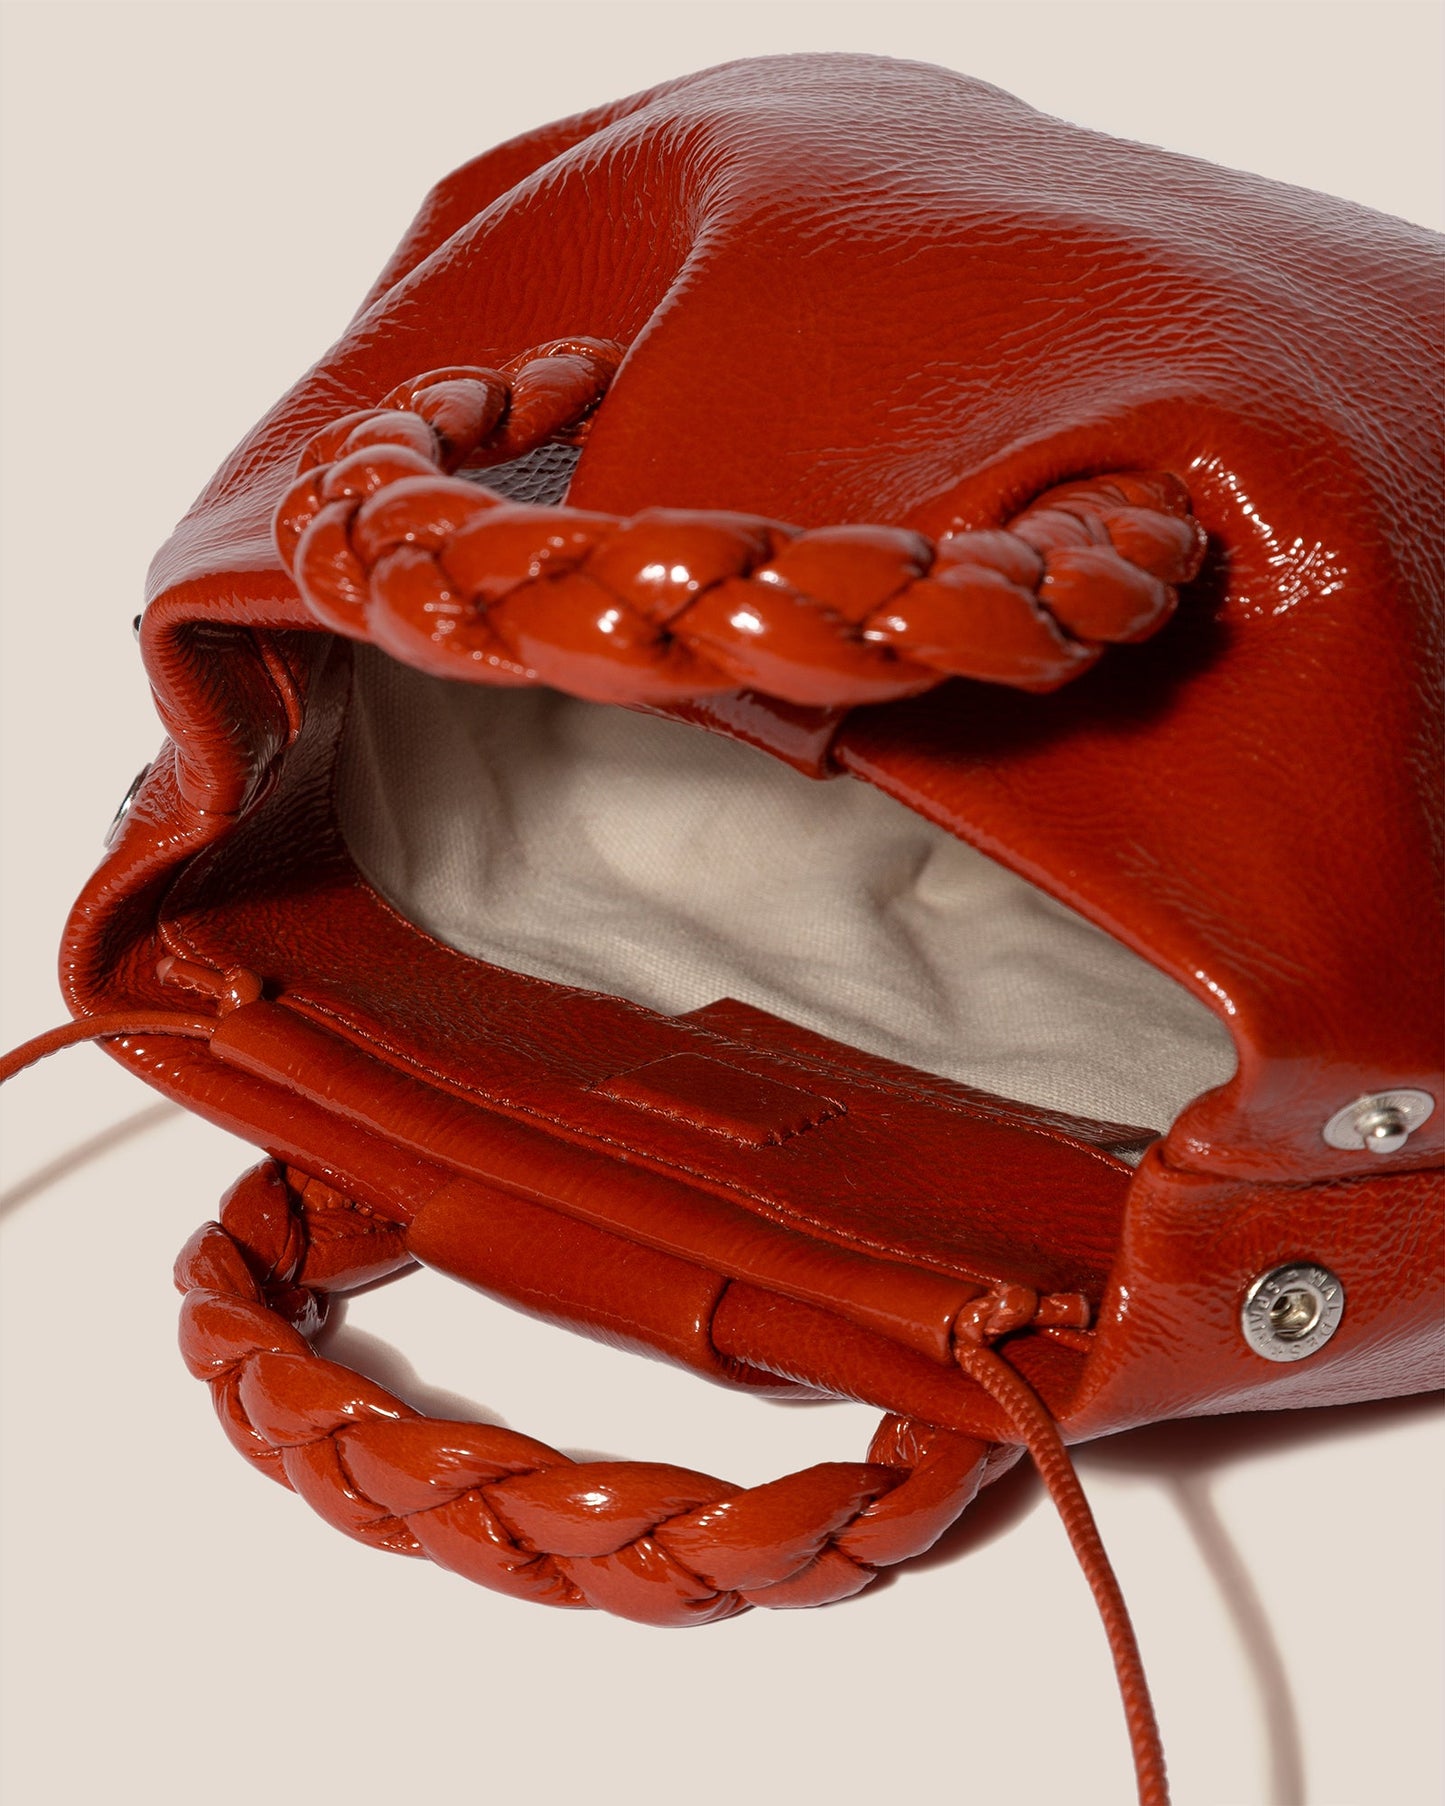 BOMBON CRINKLED GLOSSY - Small Plaited-handle Leather Crossbody Bag